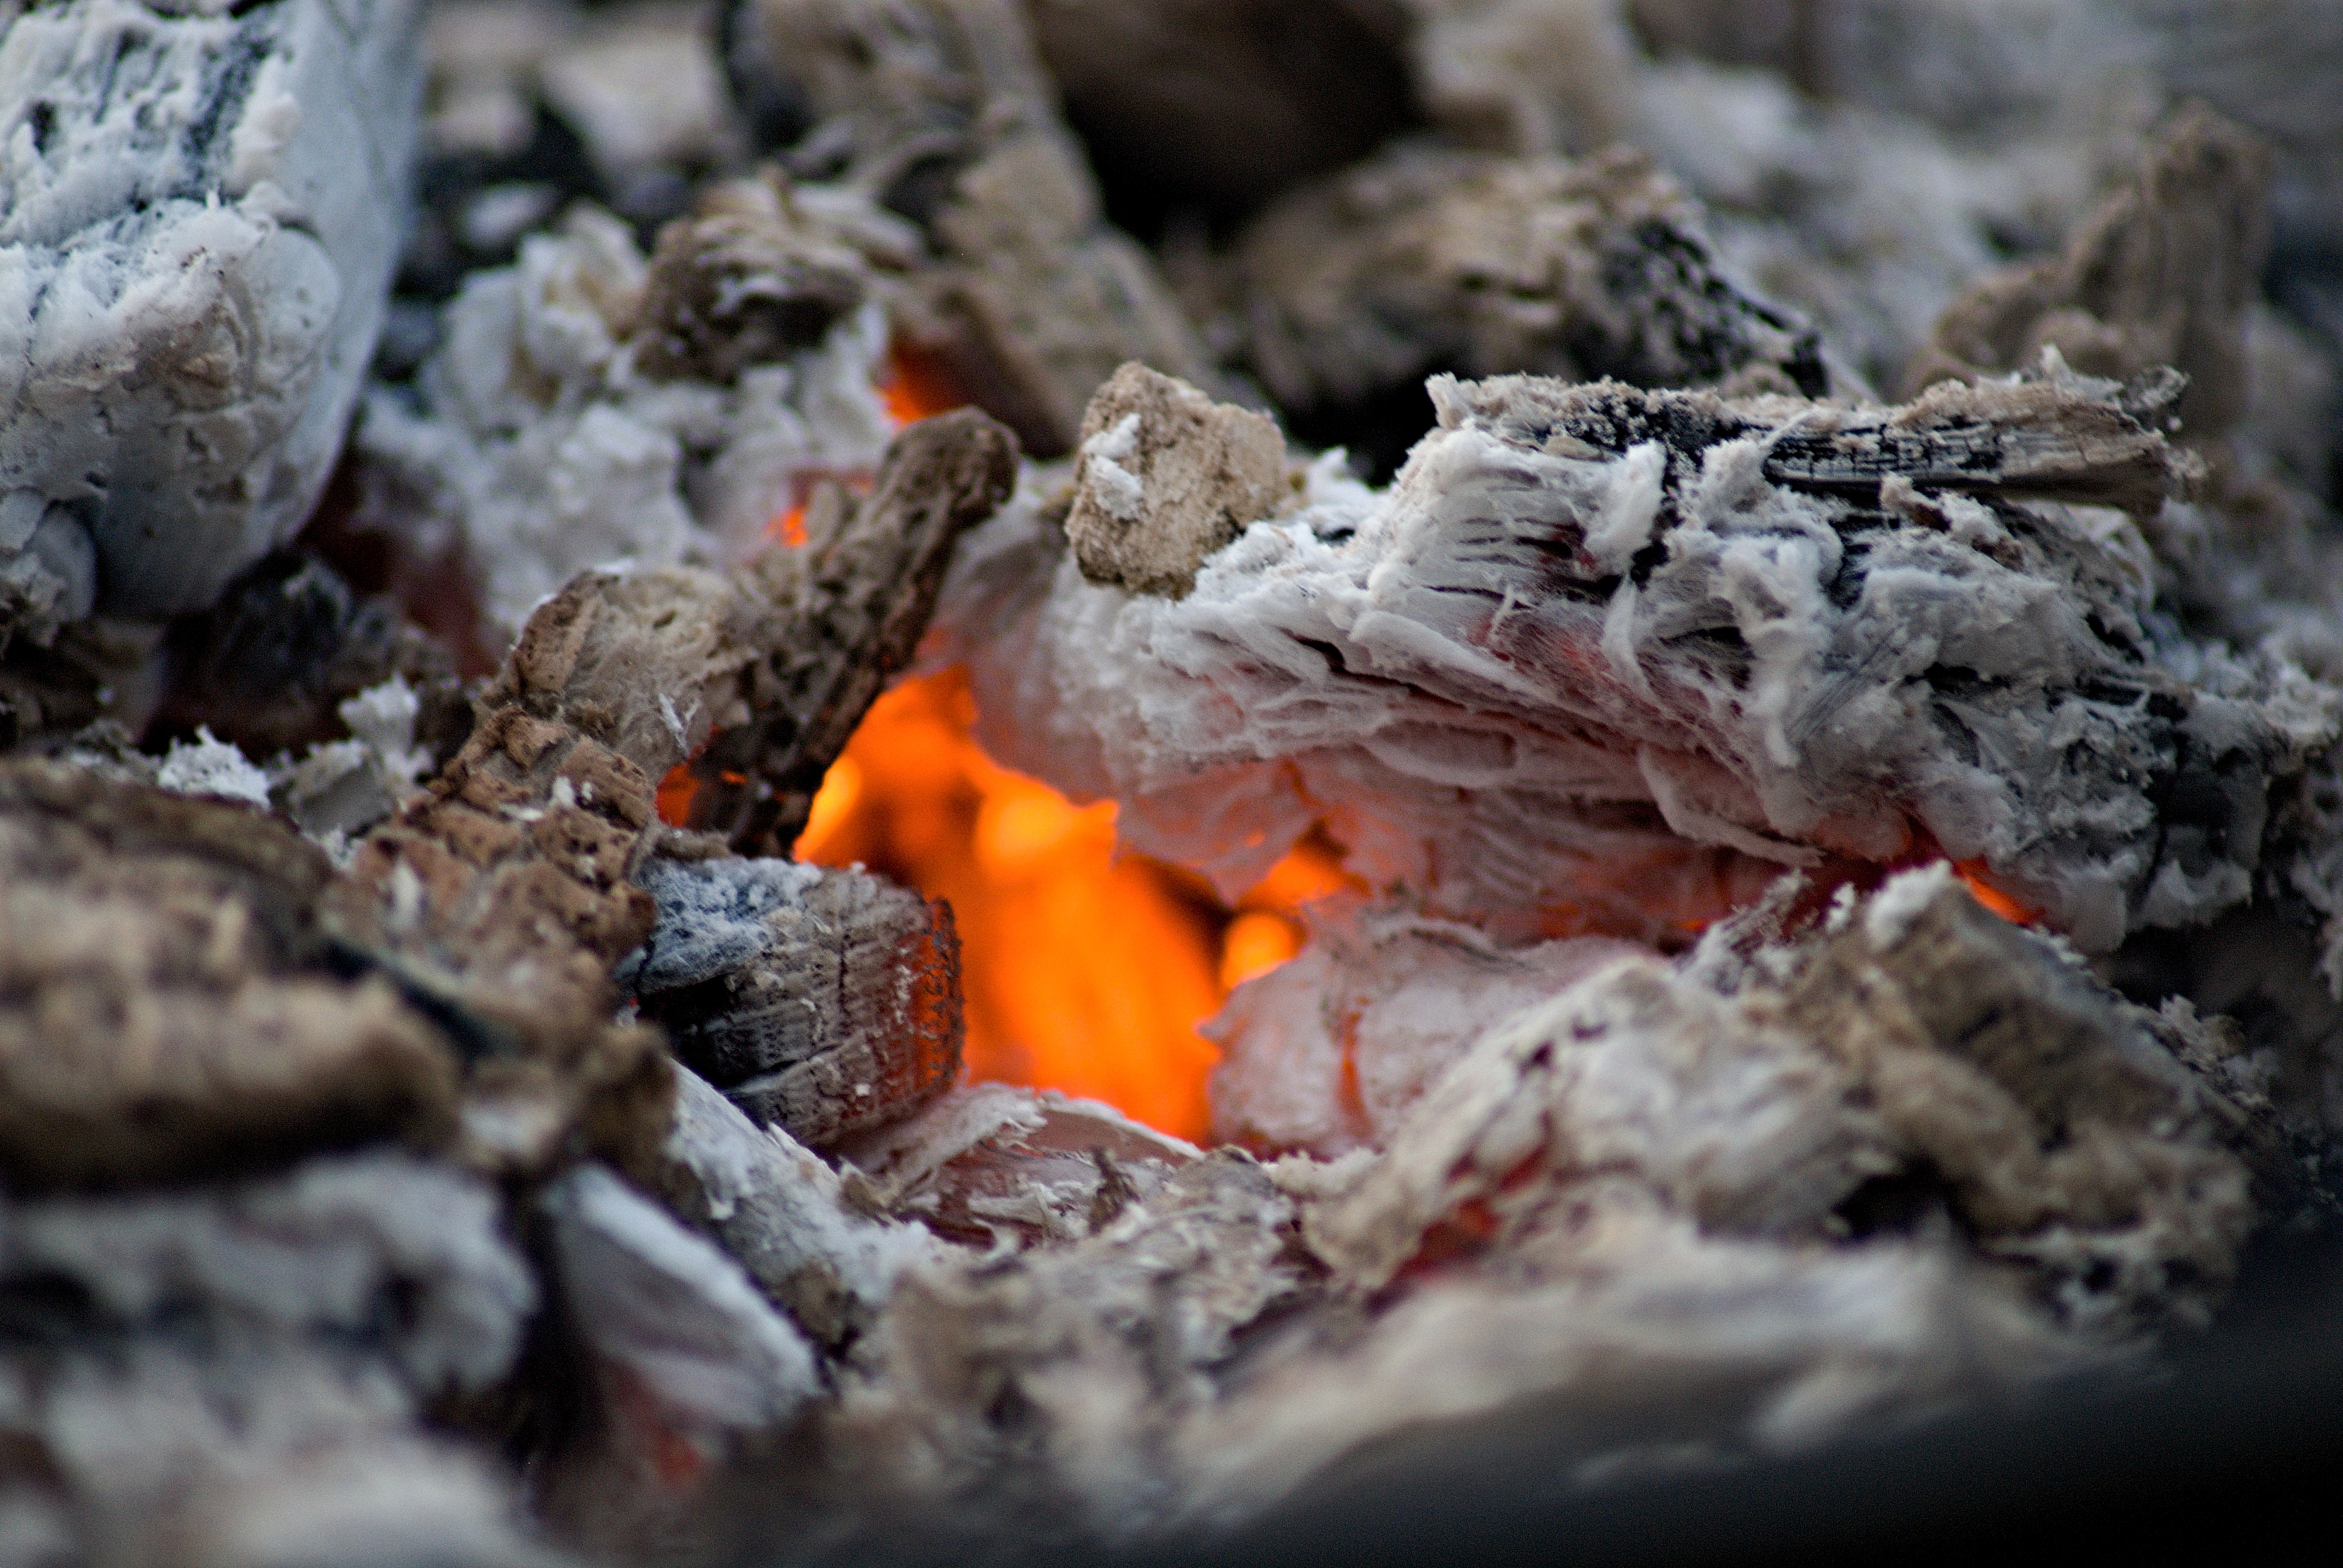 https://free-images.com/or/e4e3/fire_wood_charcoal_burning.jpg